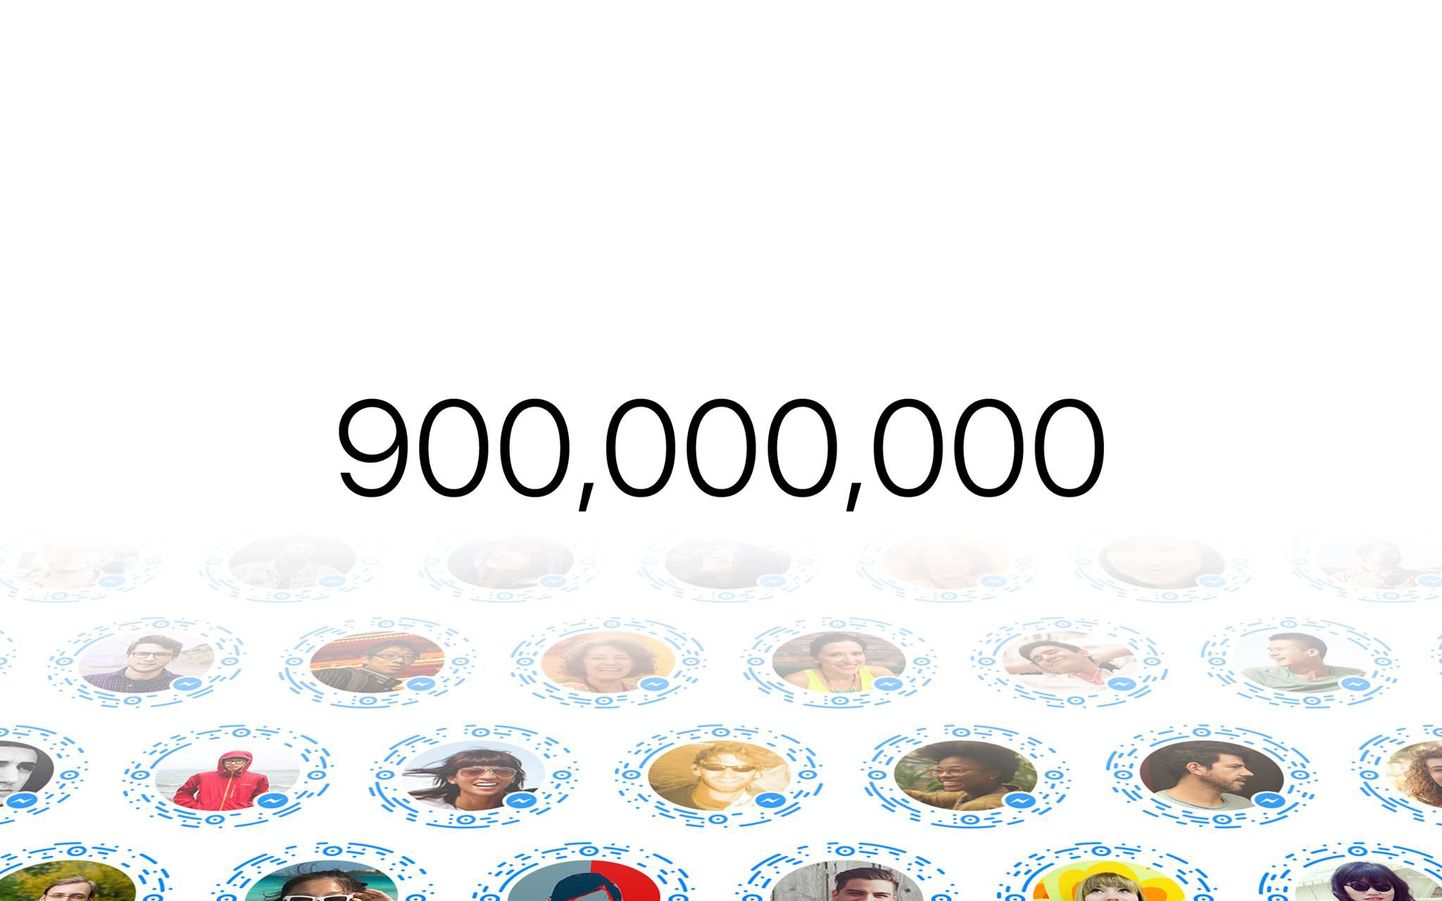 Messengeril 900 miljonit kasutajat